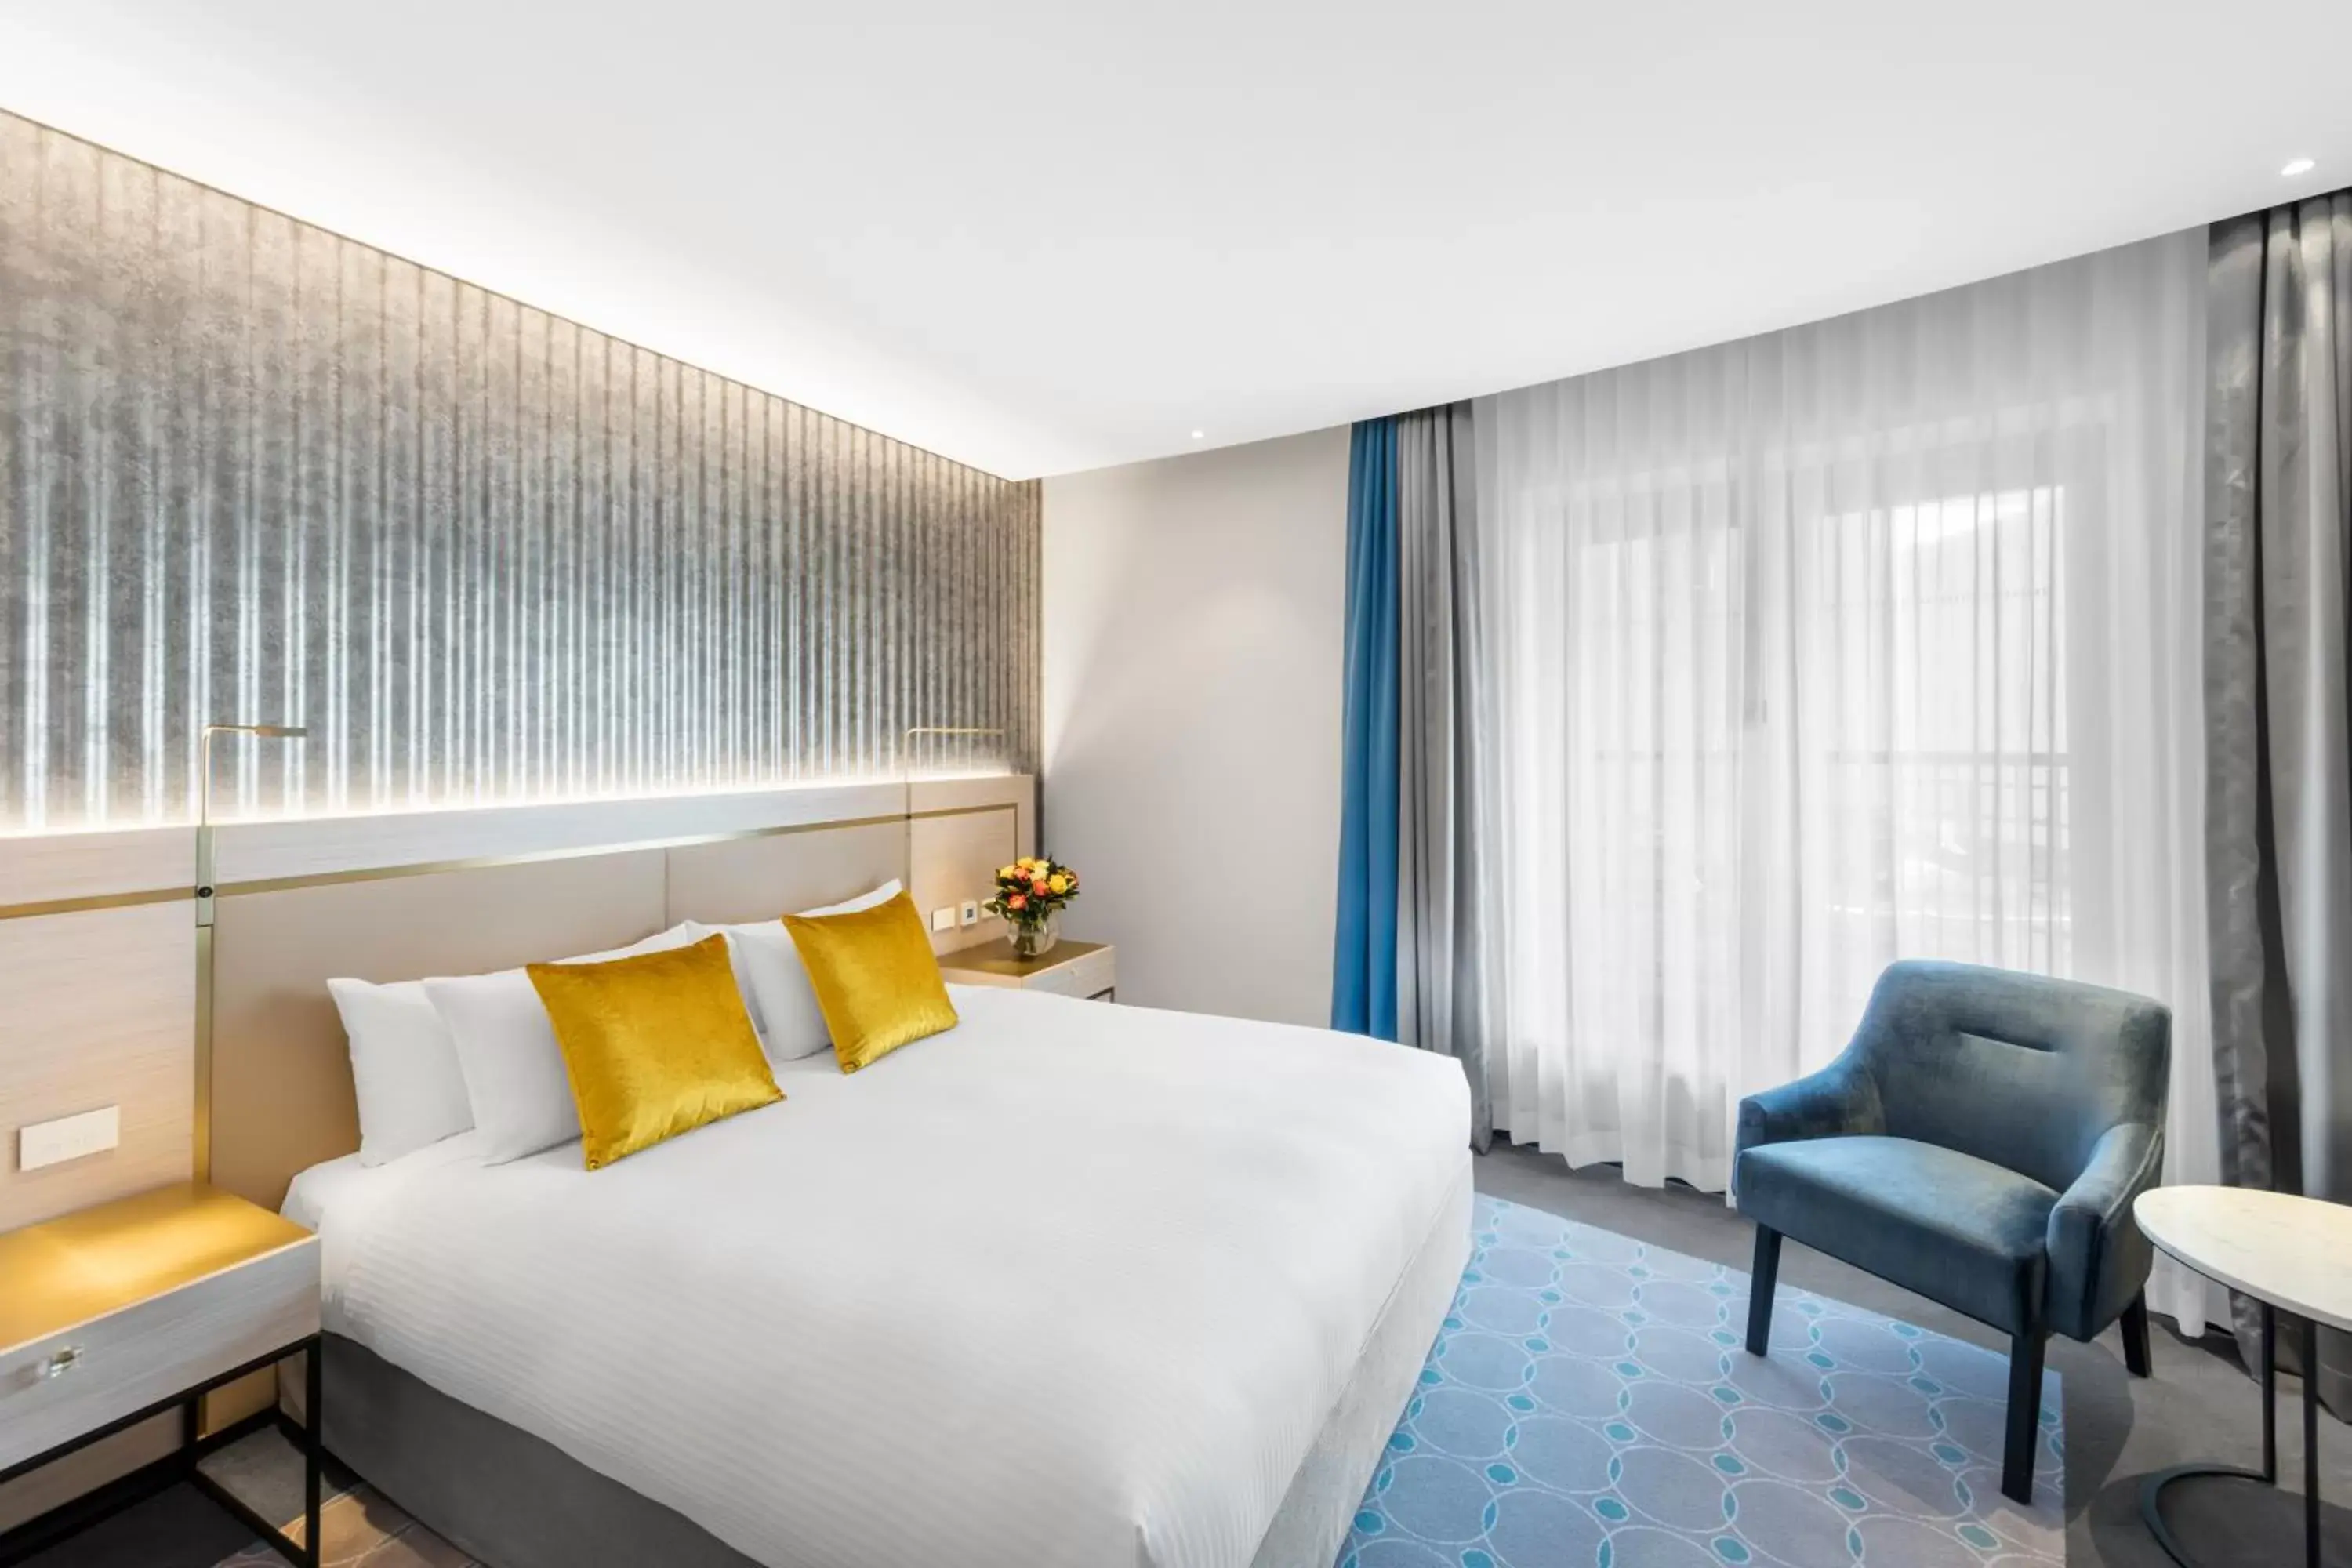 Bed, Room Photo in Radisson Blu Plaza Hotel Sydney